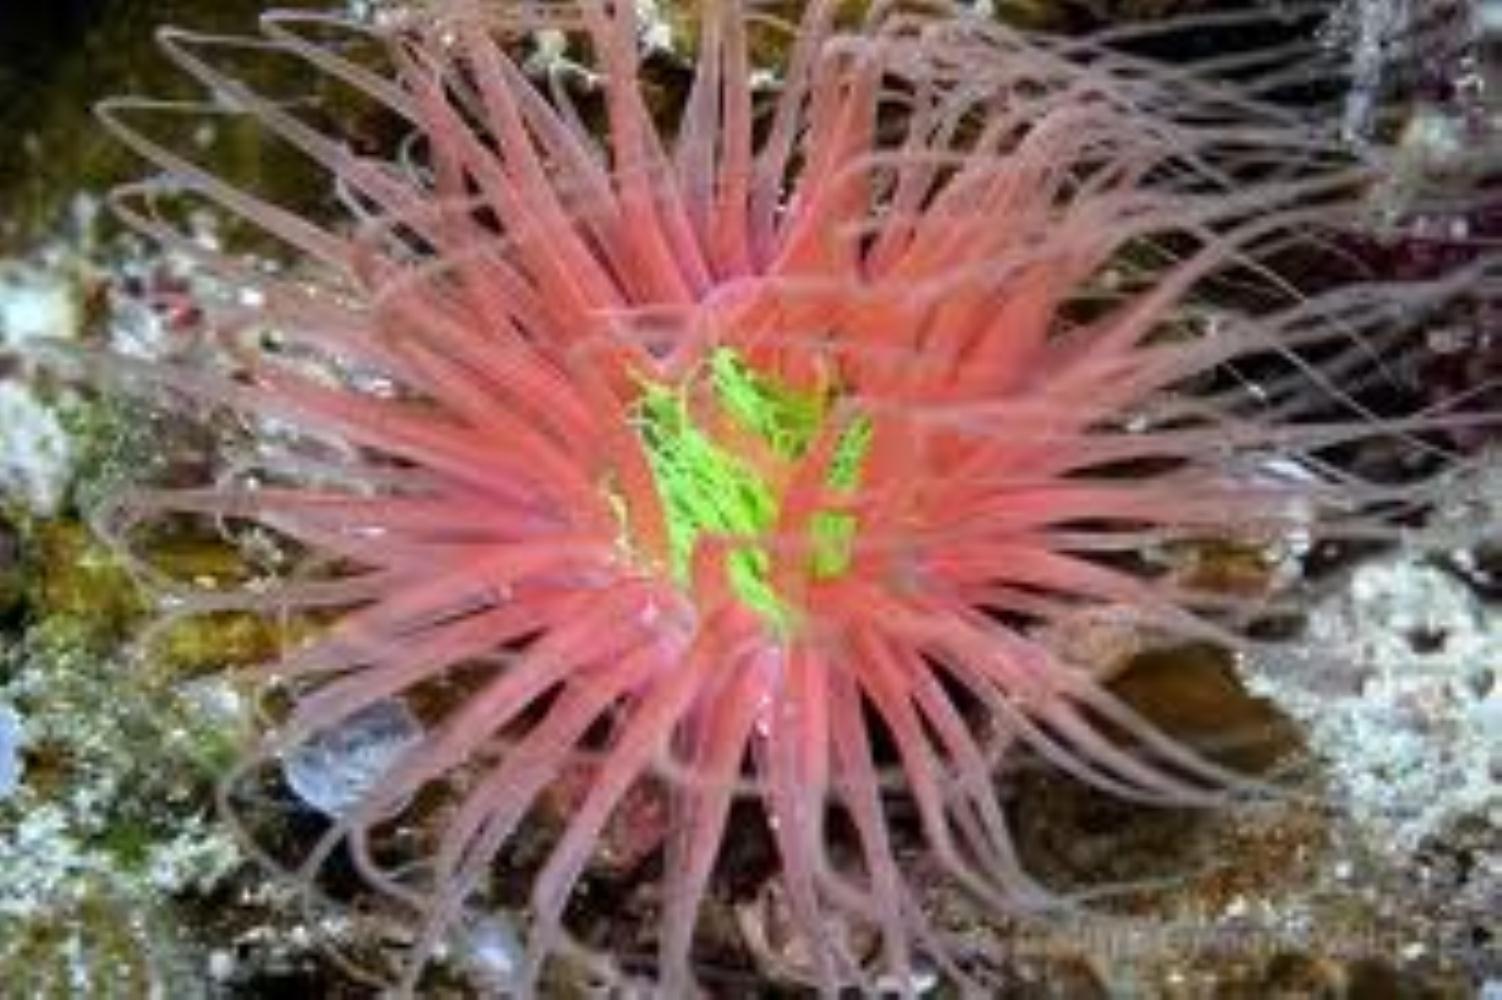 Sand anemone